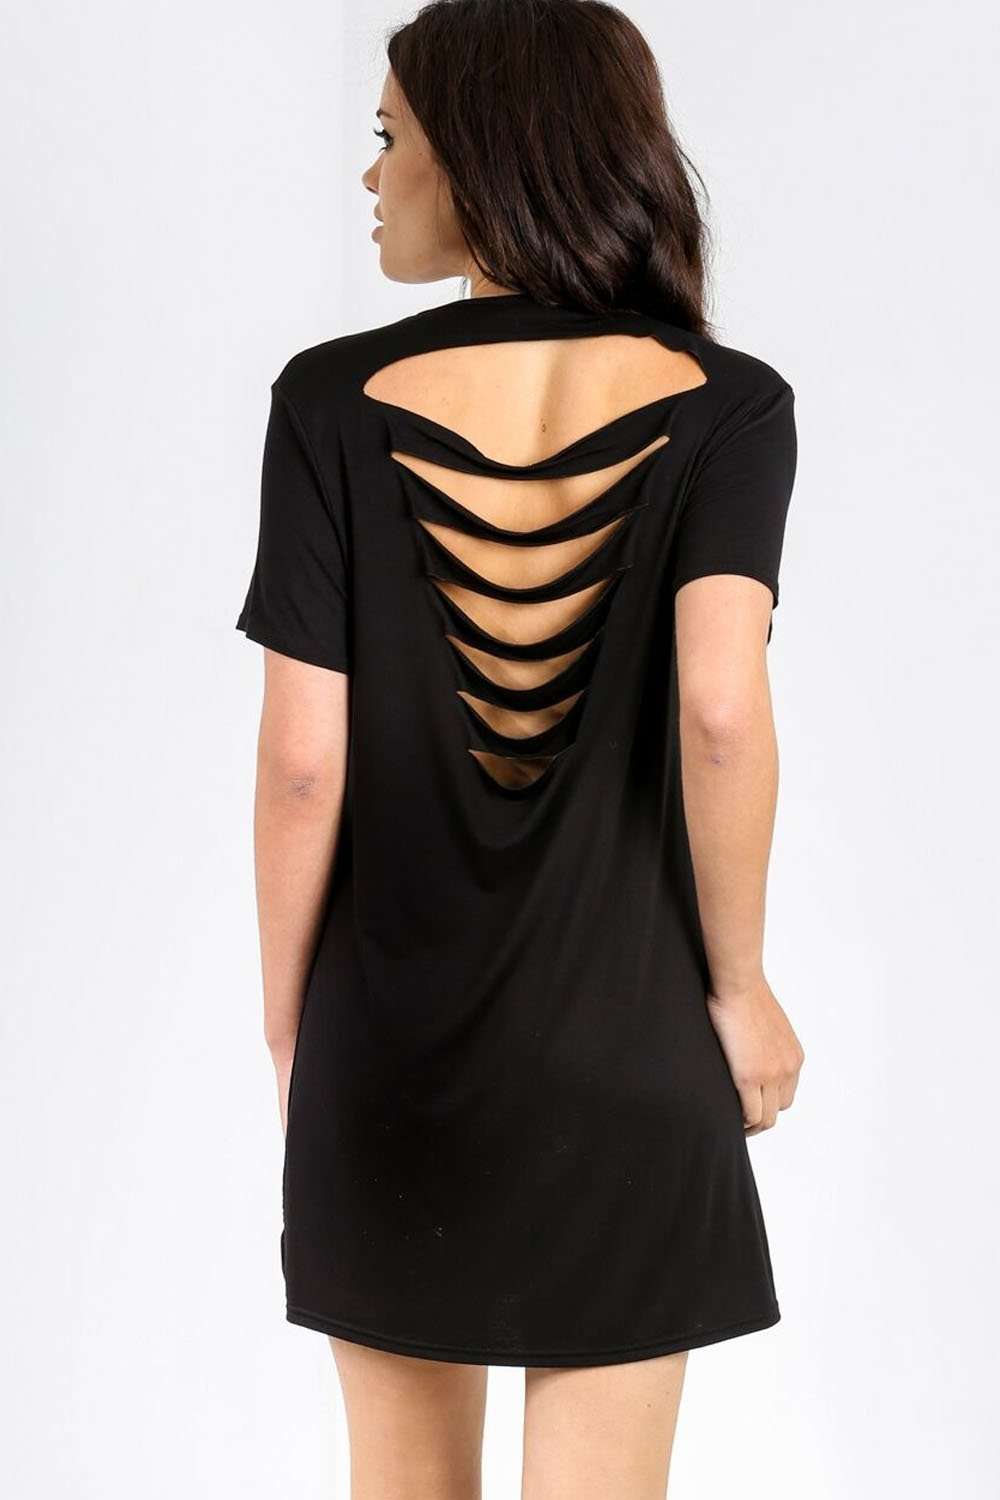 Laverna Graphic Print Slashed Back Tshirt Dress - bejealous-com